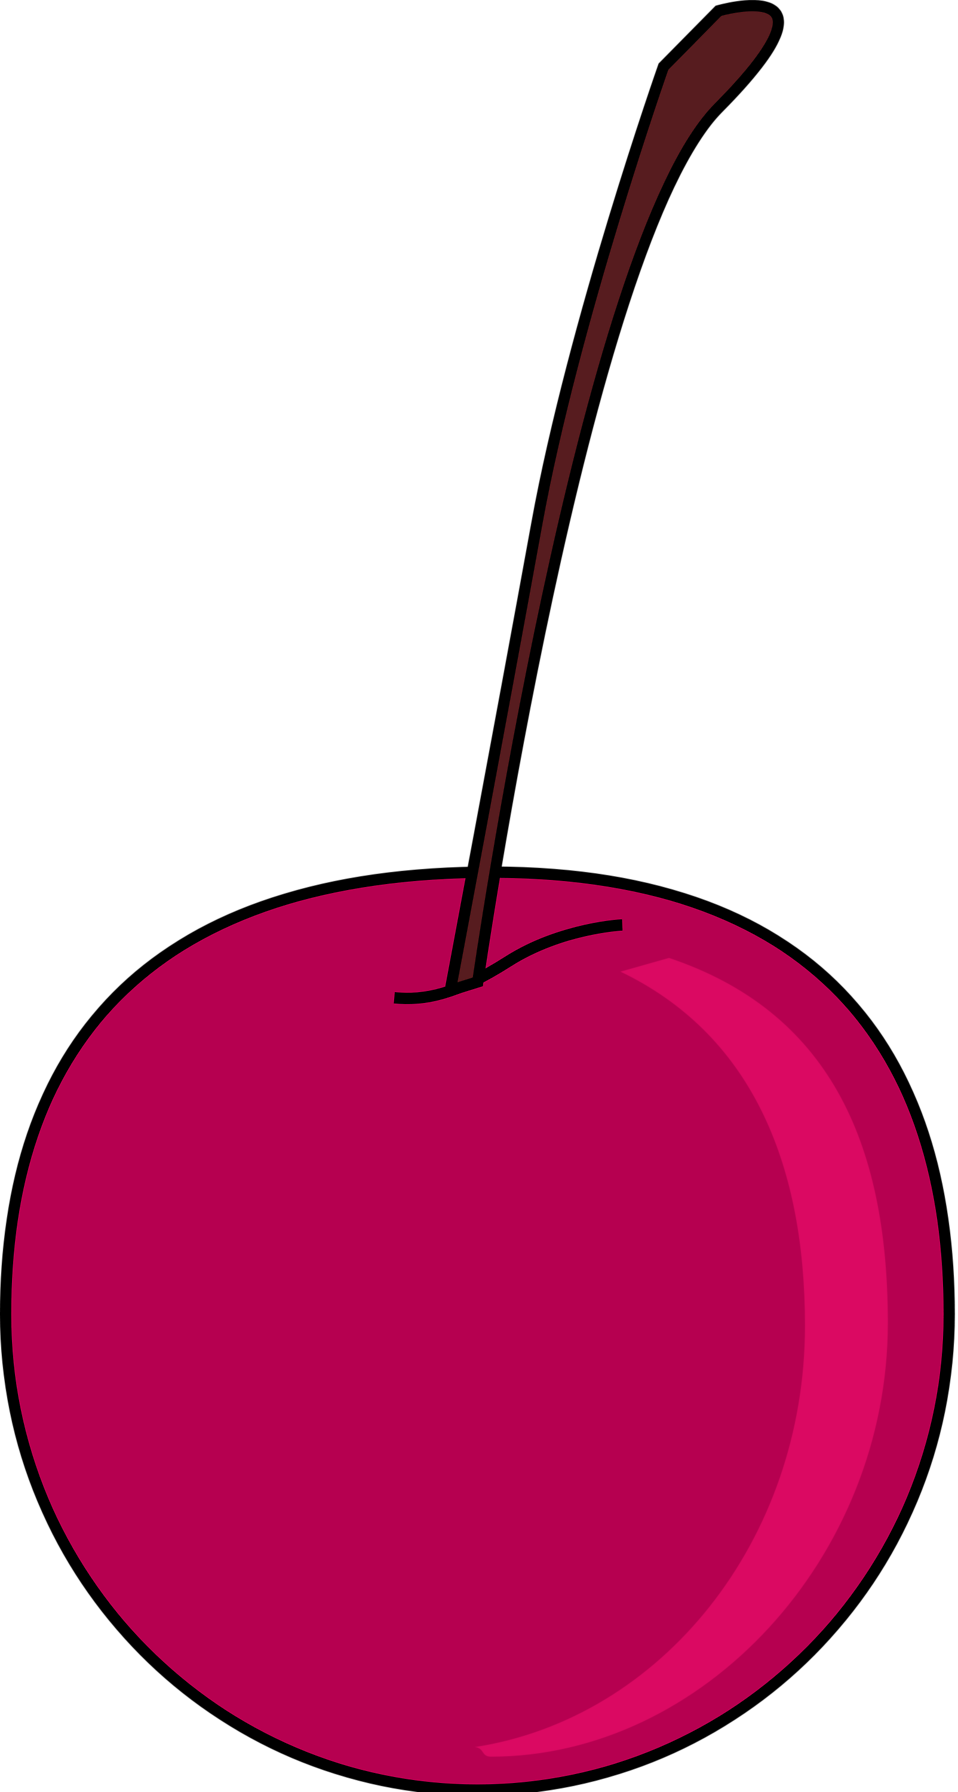 Cherry Free Stock Photo Illustration Of A Cherry - Cereja Vetor (958x1792)